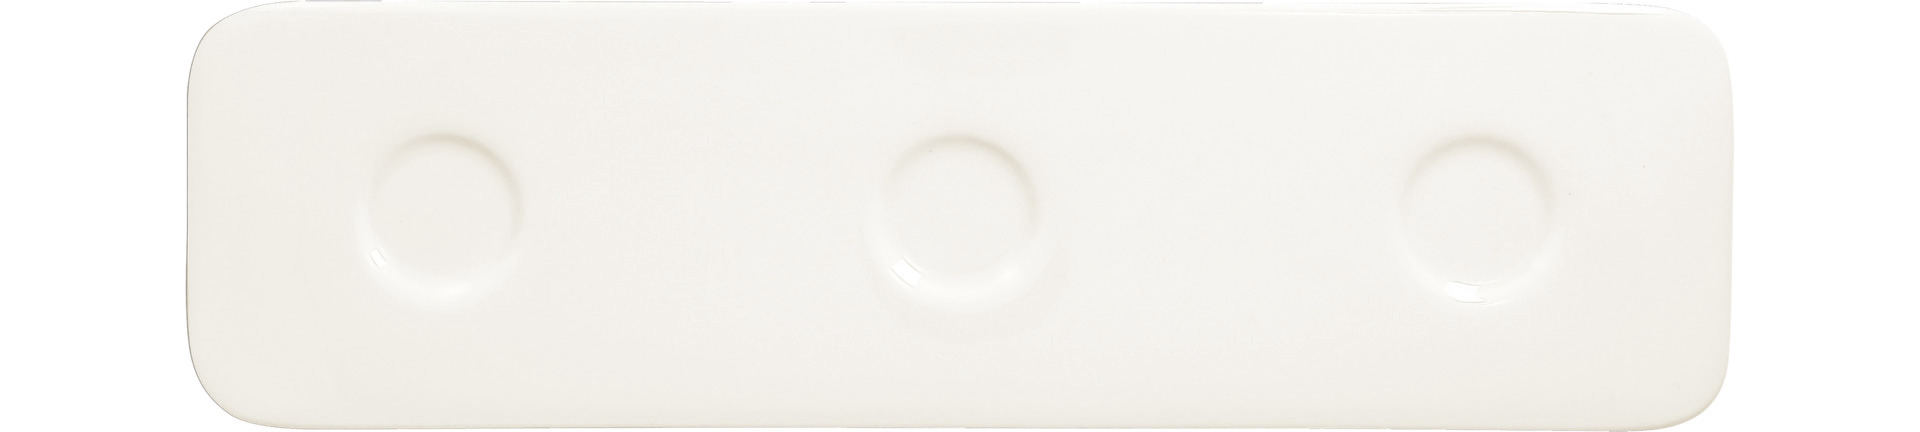 Platte rechteckig shaped mit 3 Ringen 360 x 100 mm plain-white